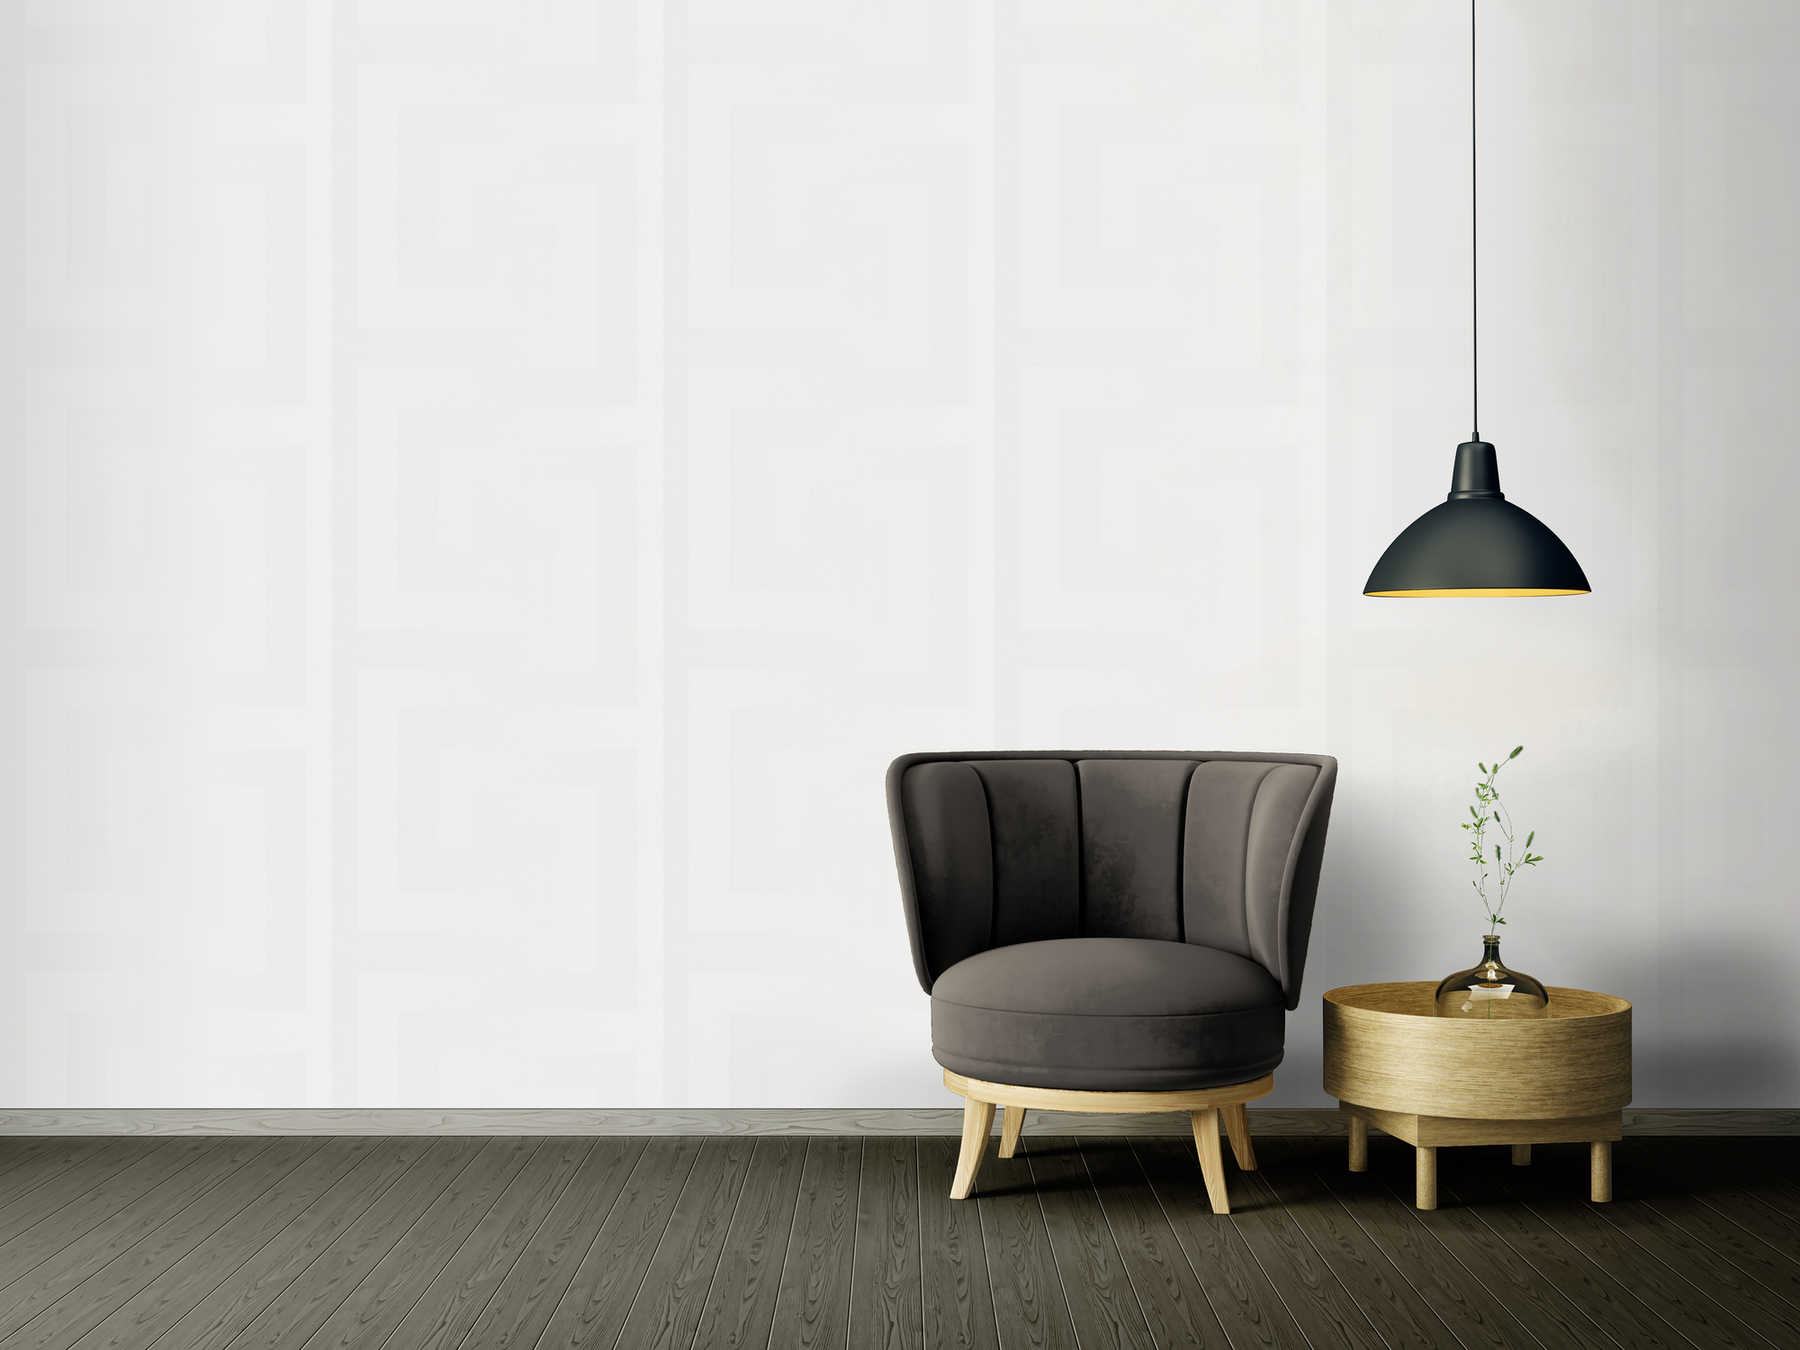             VERSACE wallpaper meander pattern & metallic luster - white
        